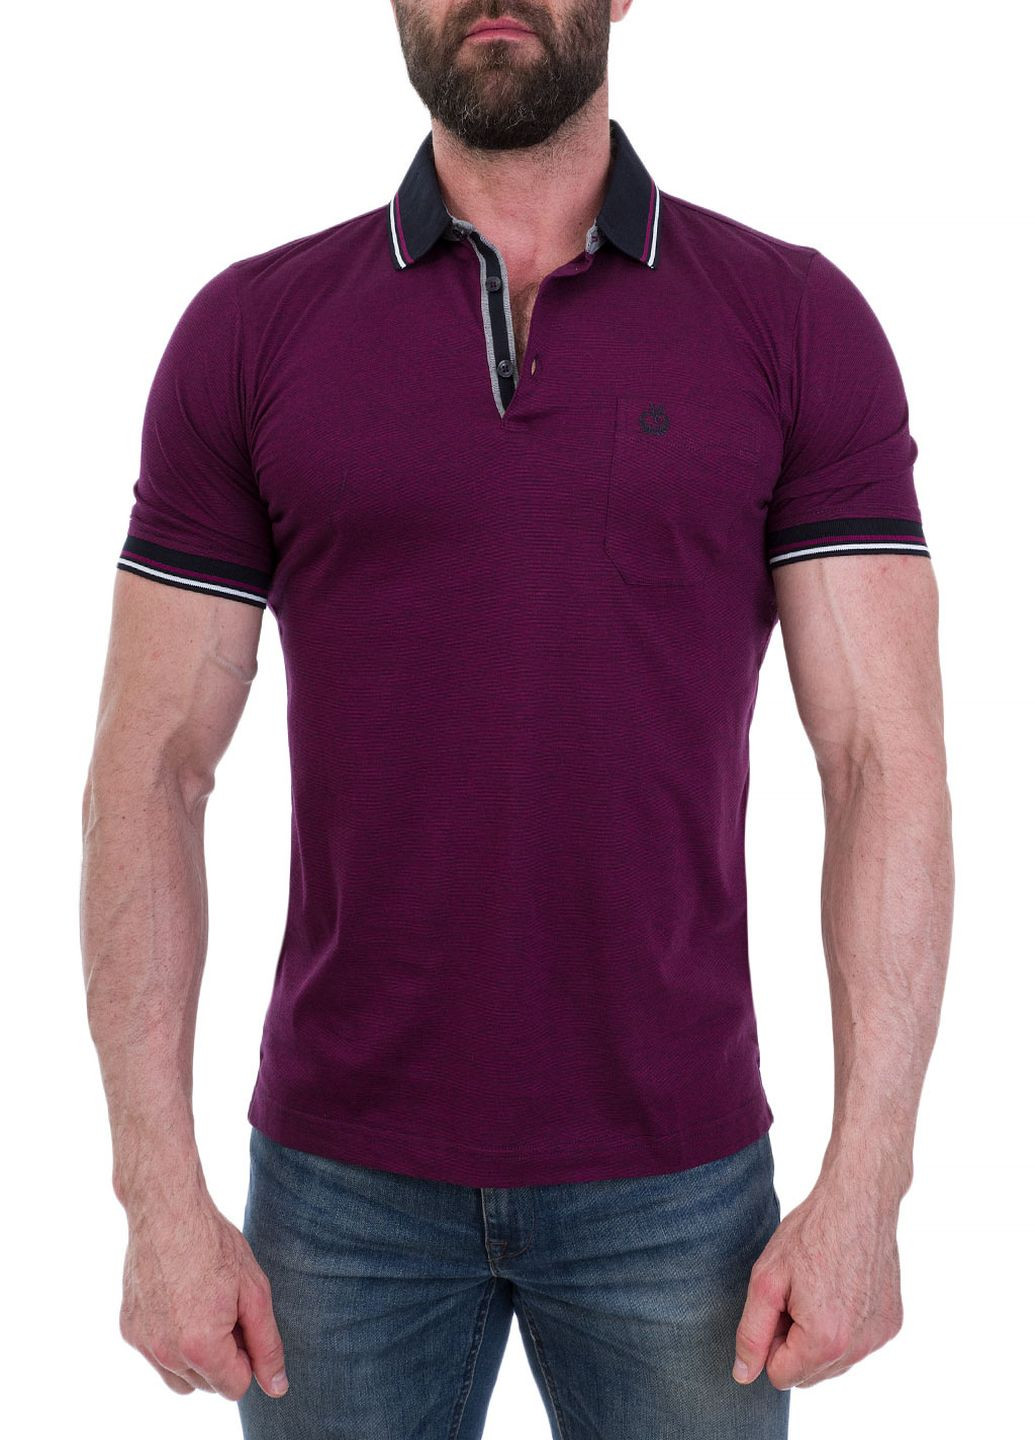 Фиолетовая футболка-поло для мужчин Monte Carlo однотонная